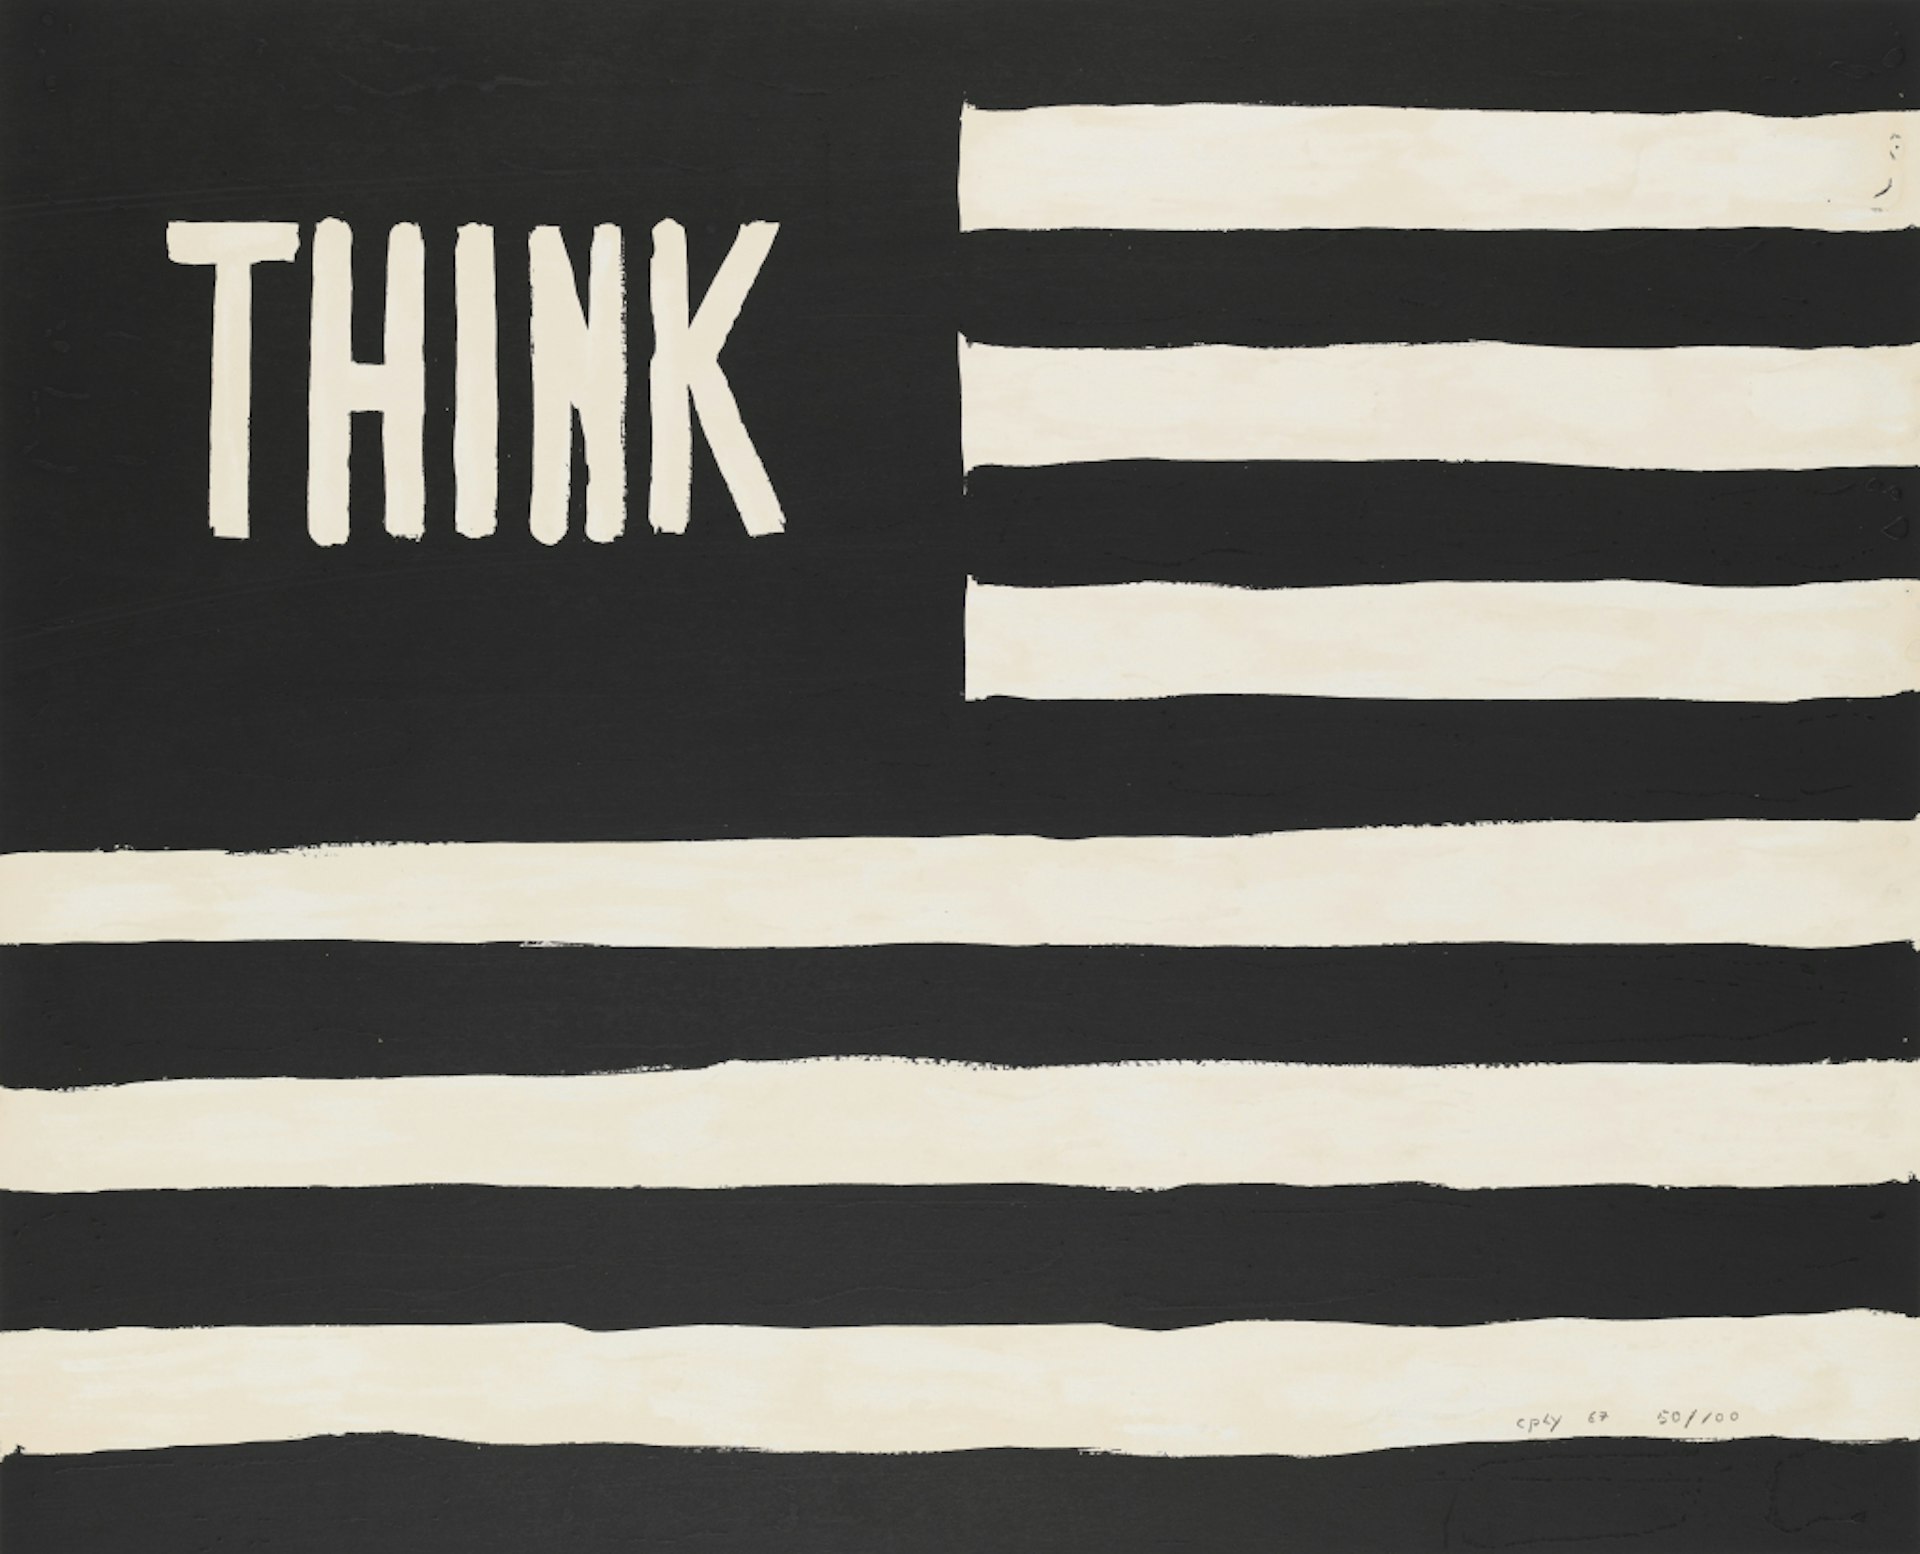 Untitled (Think/flag), 1967, William N. Copley. Courtesy the Whitney.